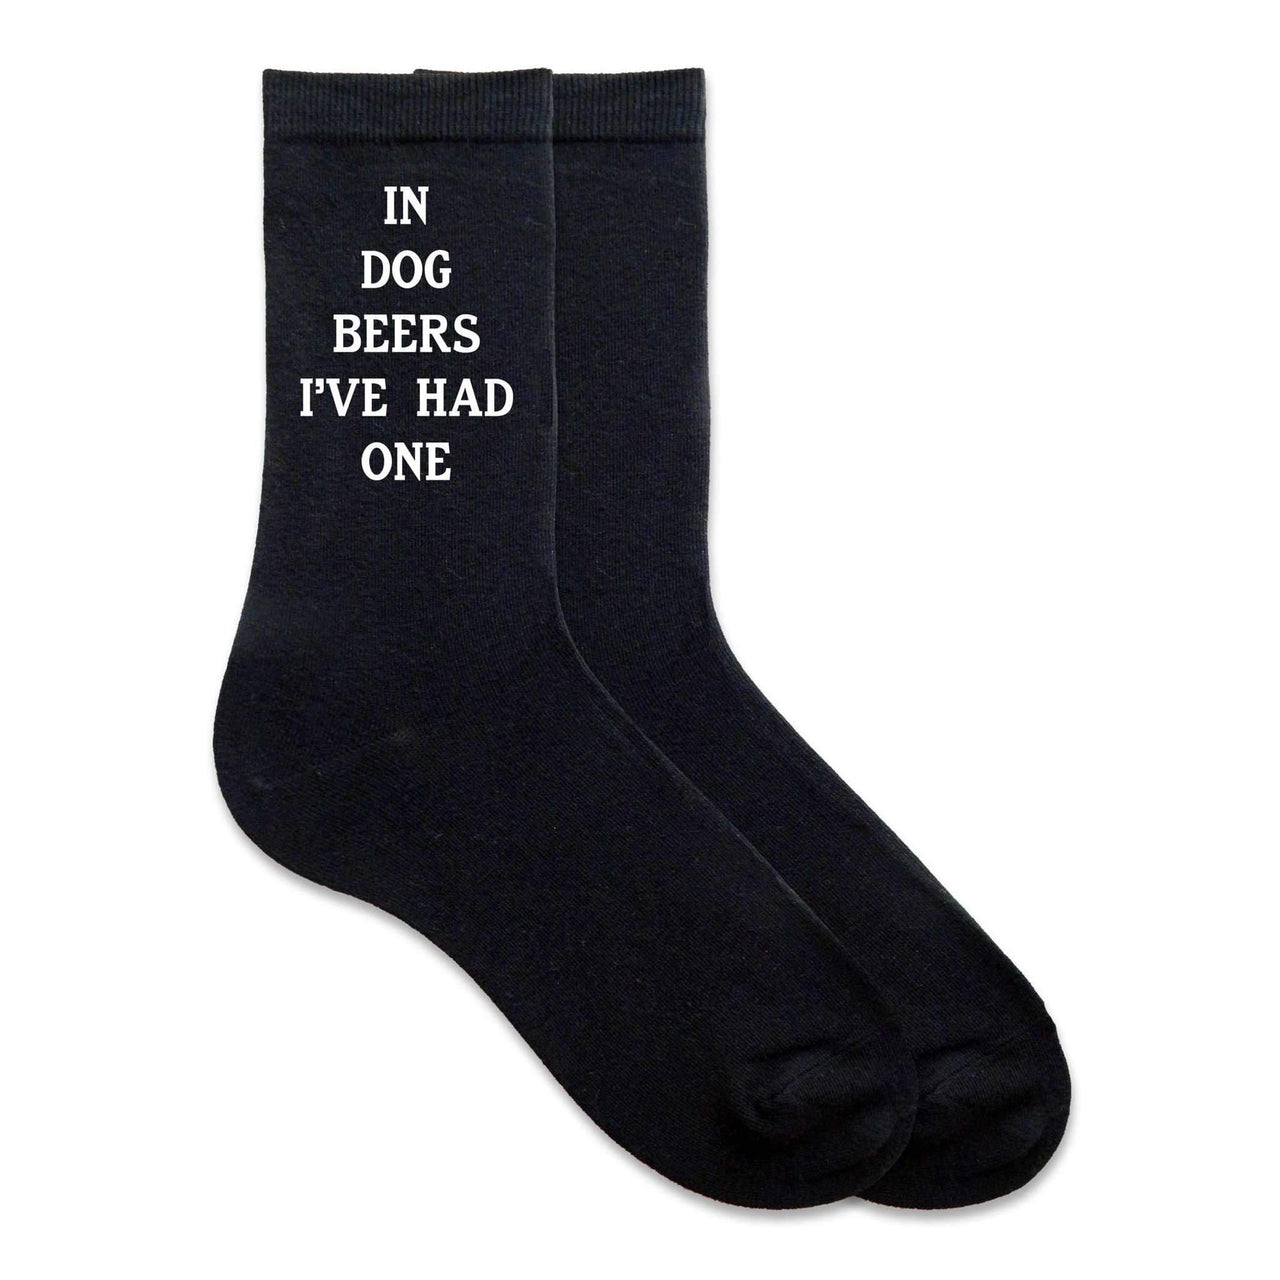 In dog beers I've had one custom printed on socks.